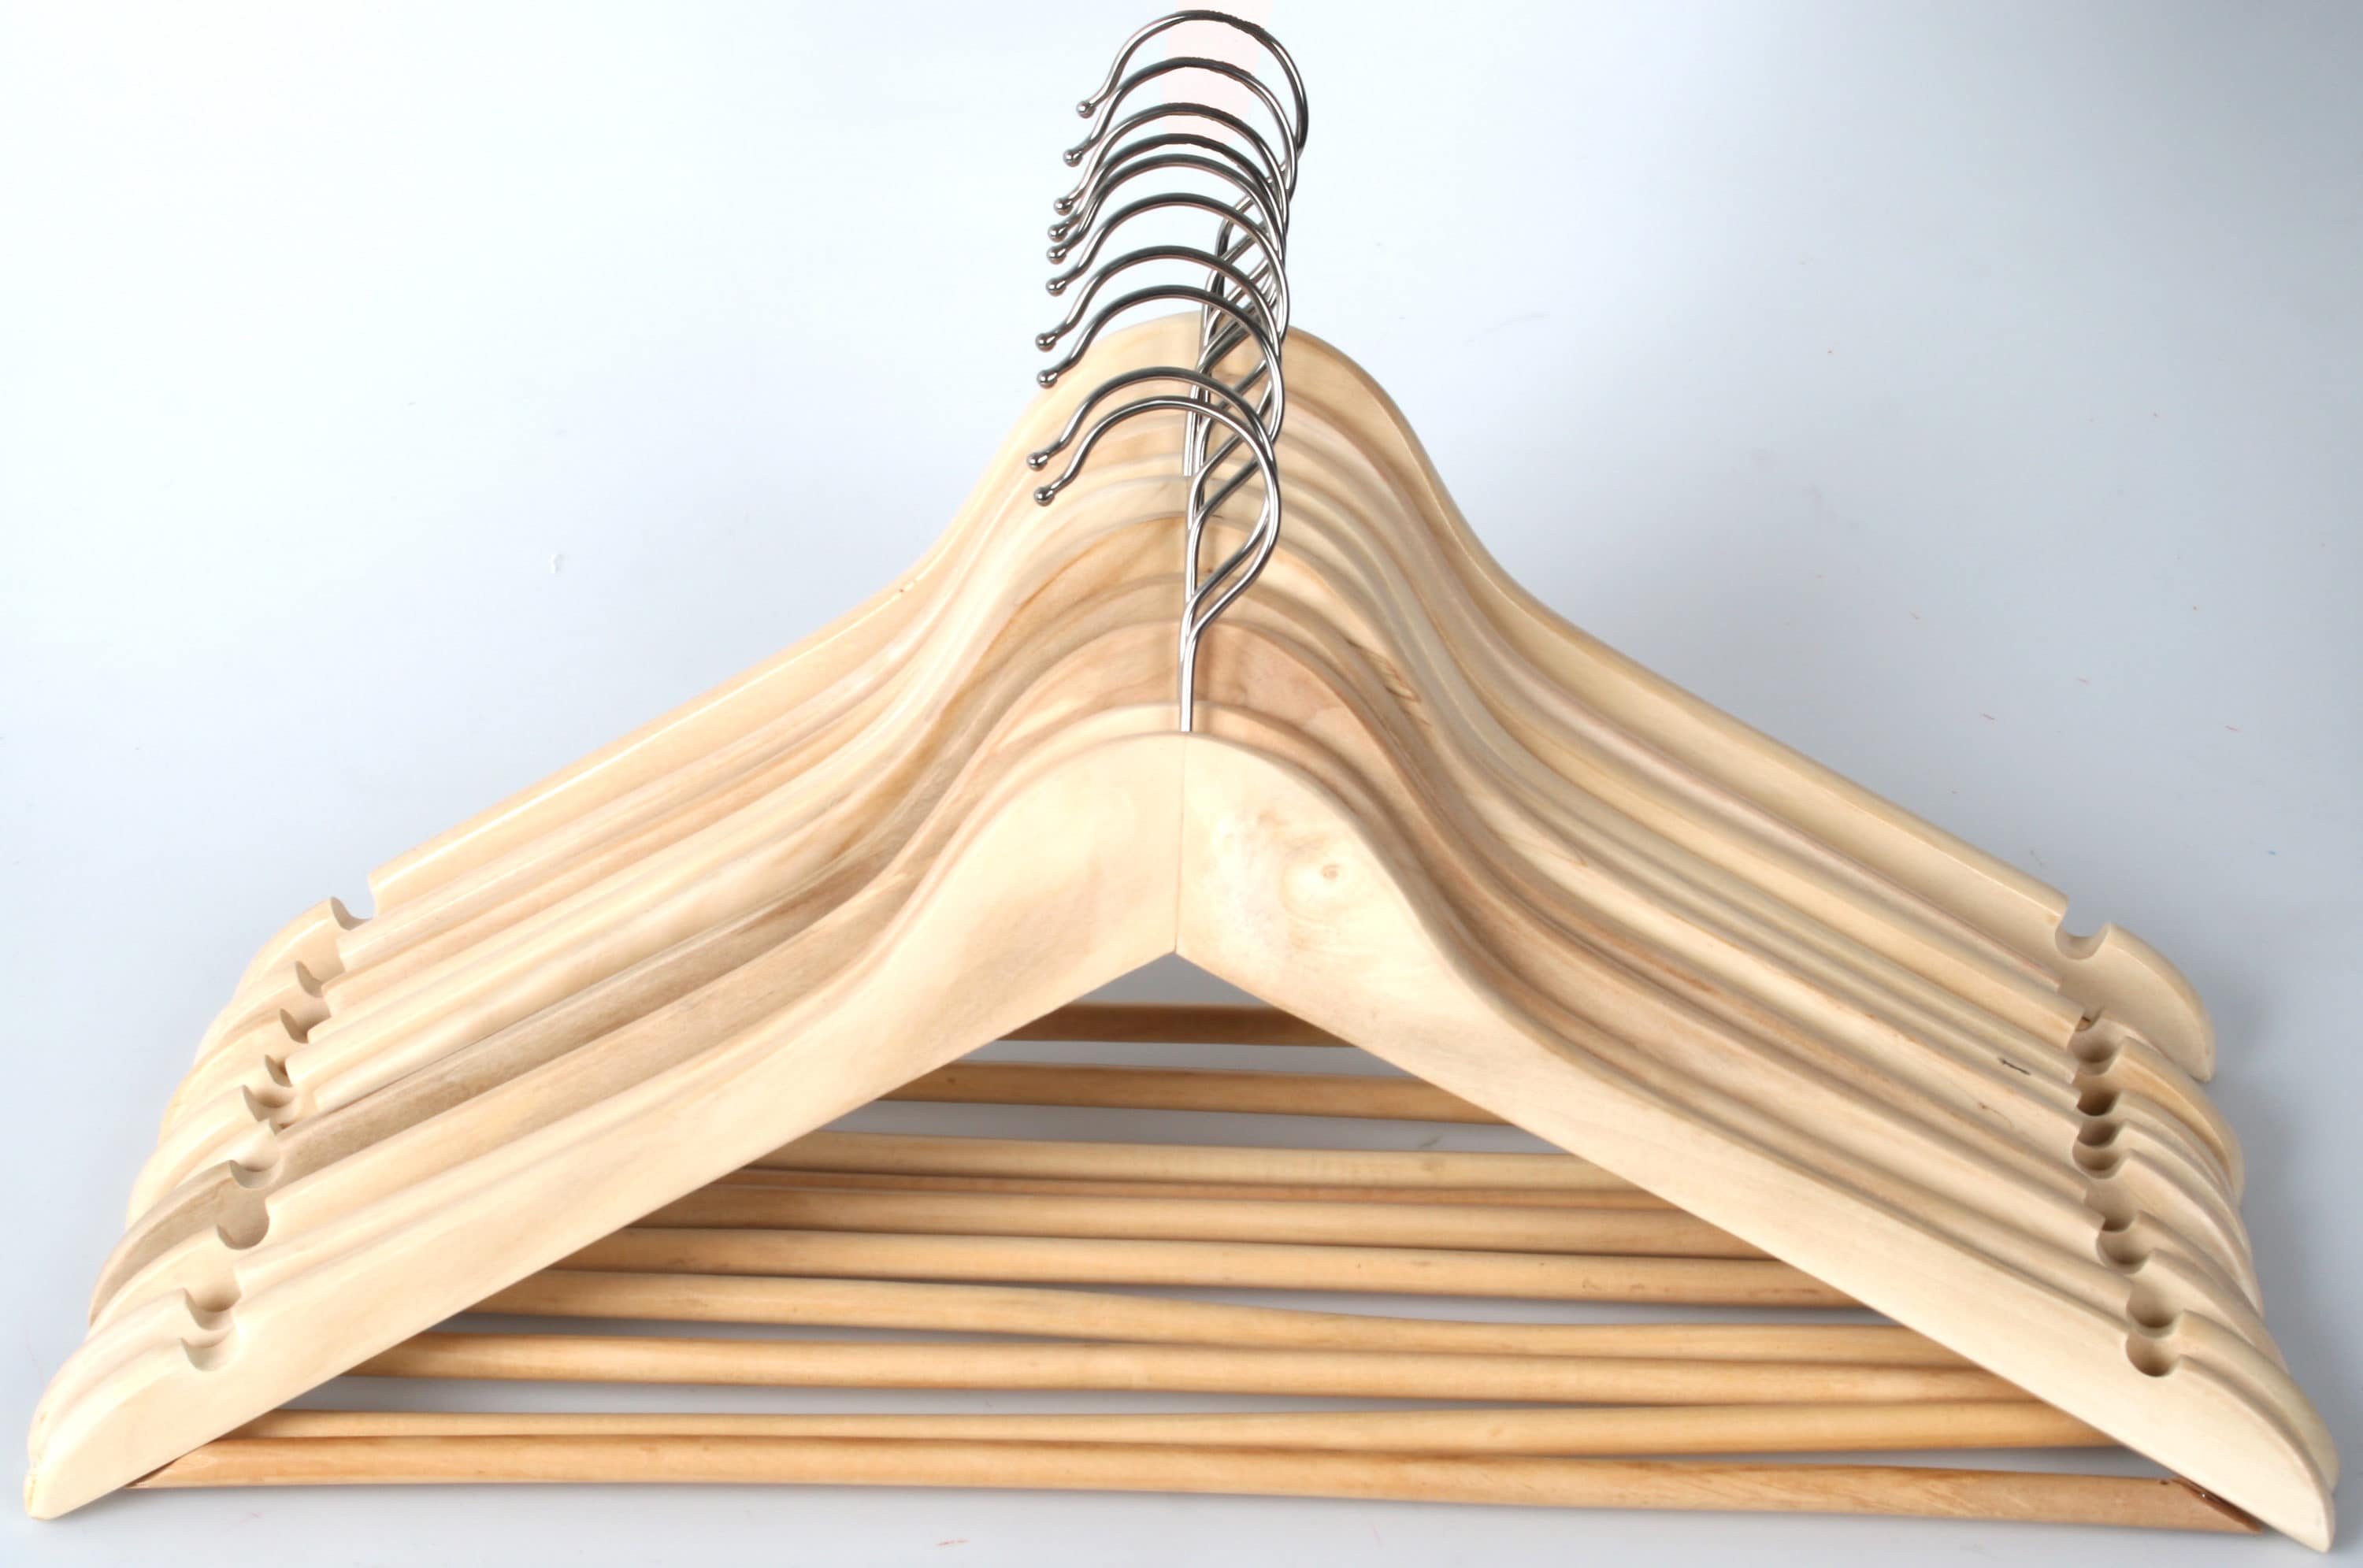 6Pcs Clothes Hanger Connector Hooks - Inspire Uplift